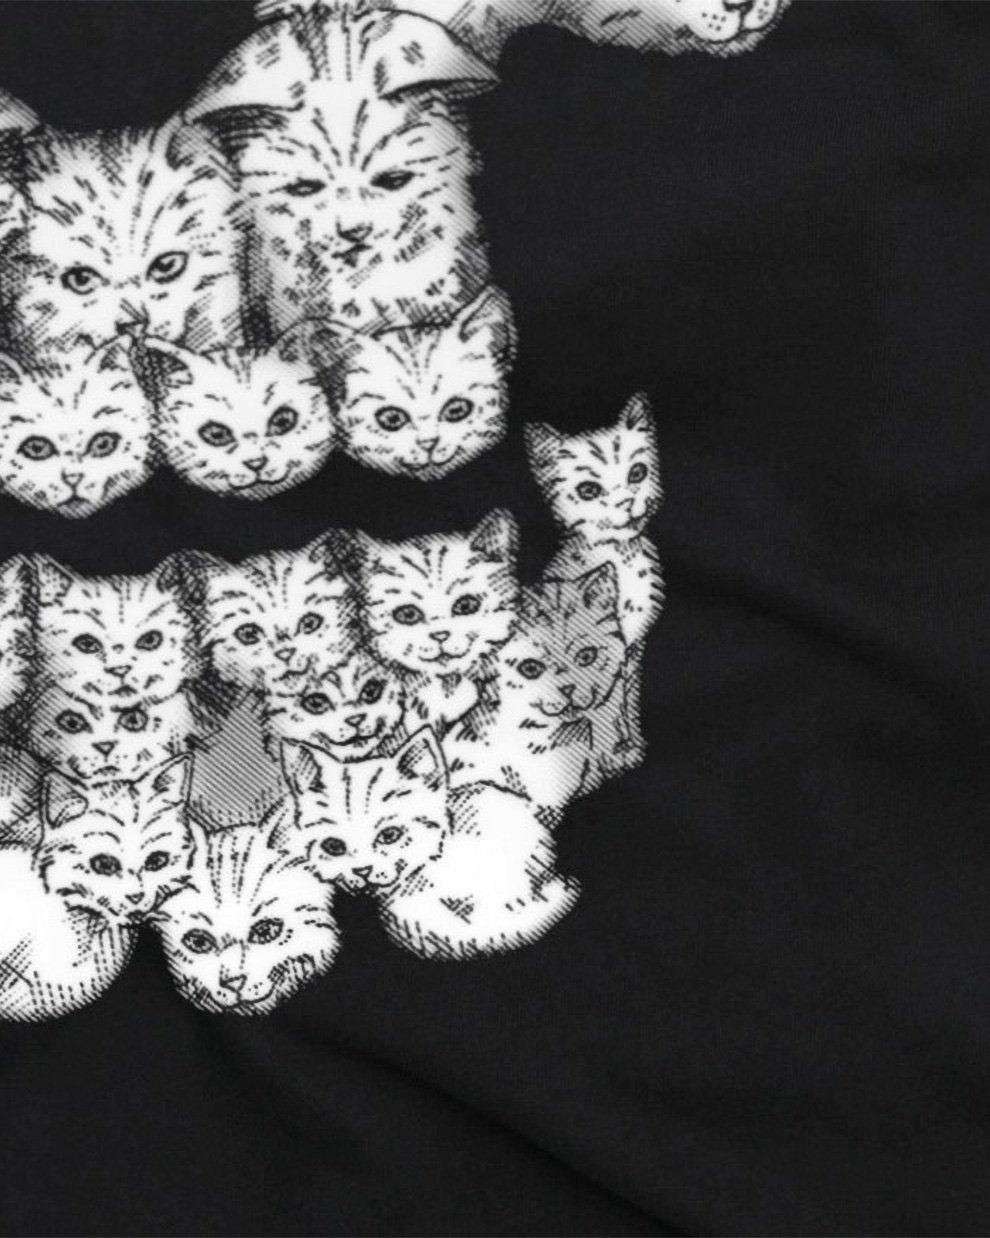 katze bbt Cat Herren miez Skull katzen T-Shirt tattoo style3 mieze Print-Shirt rock kater totenkopf